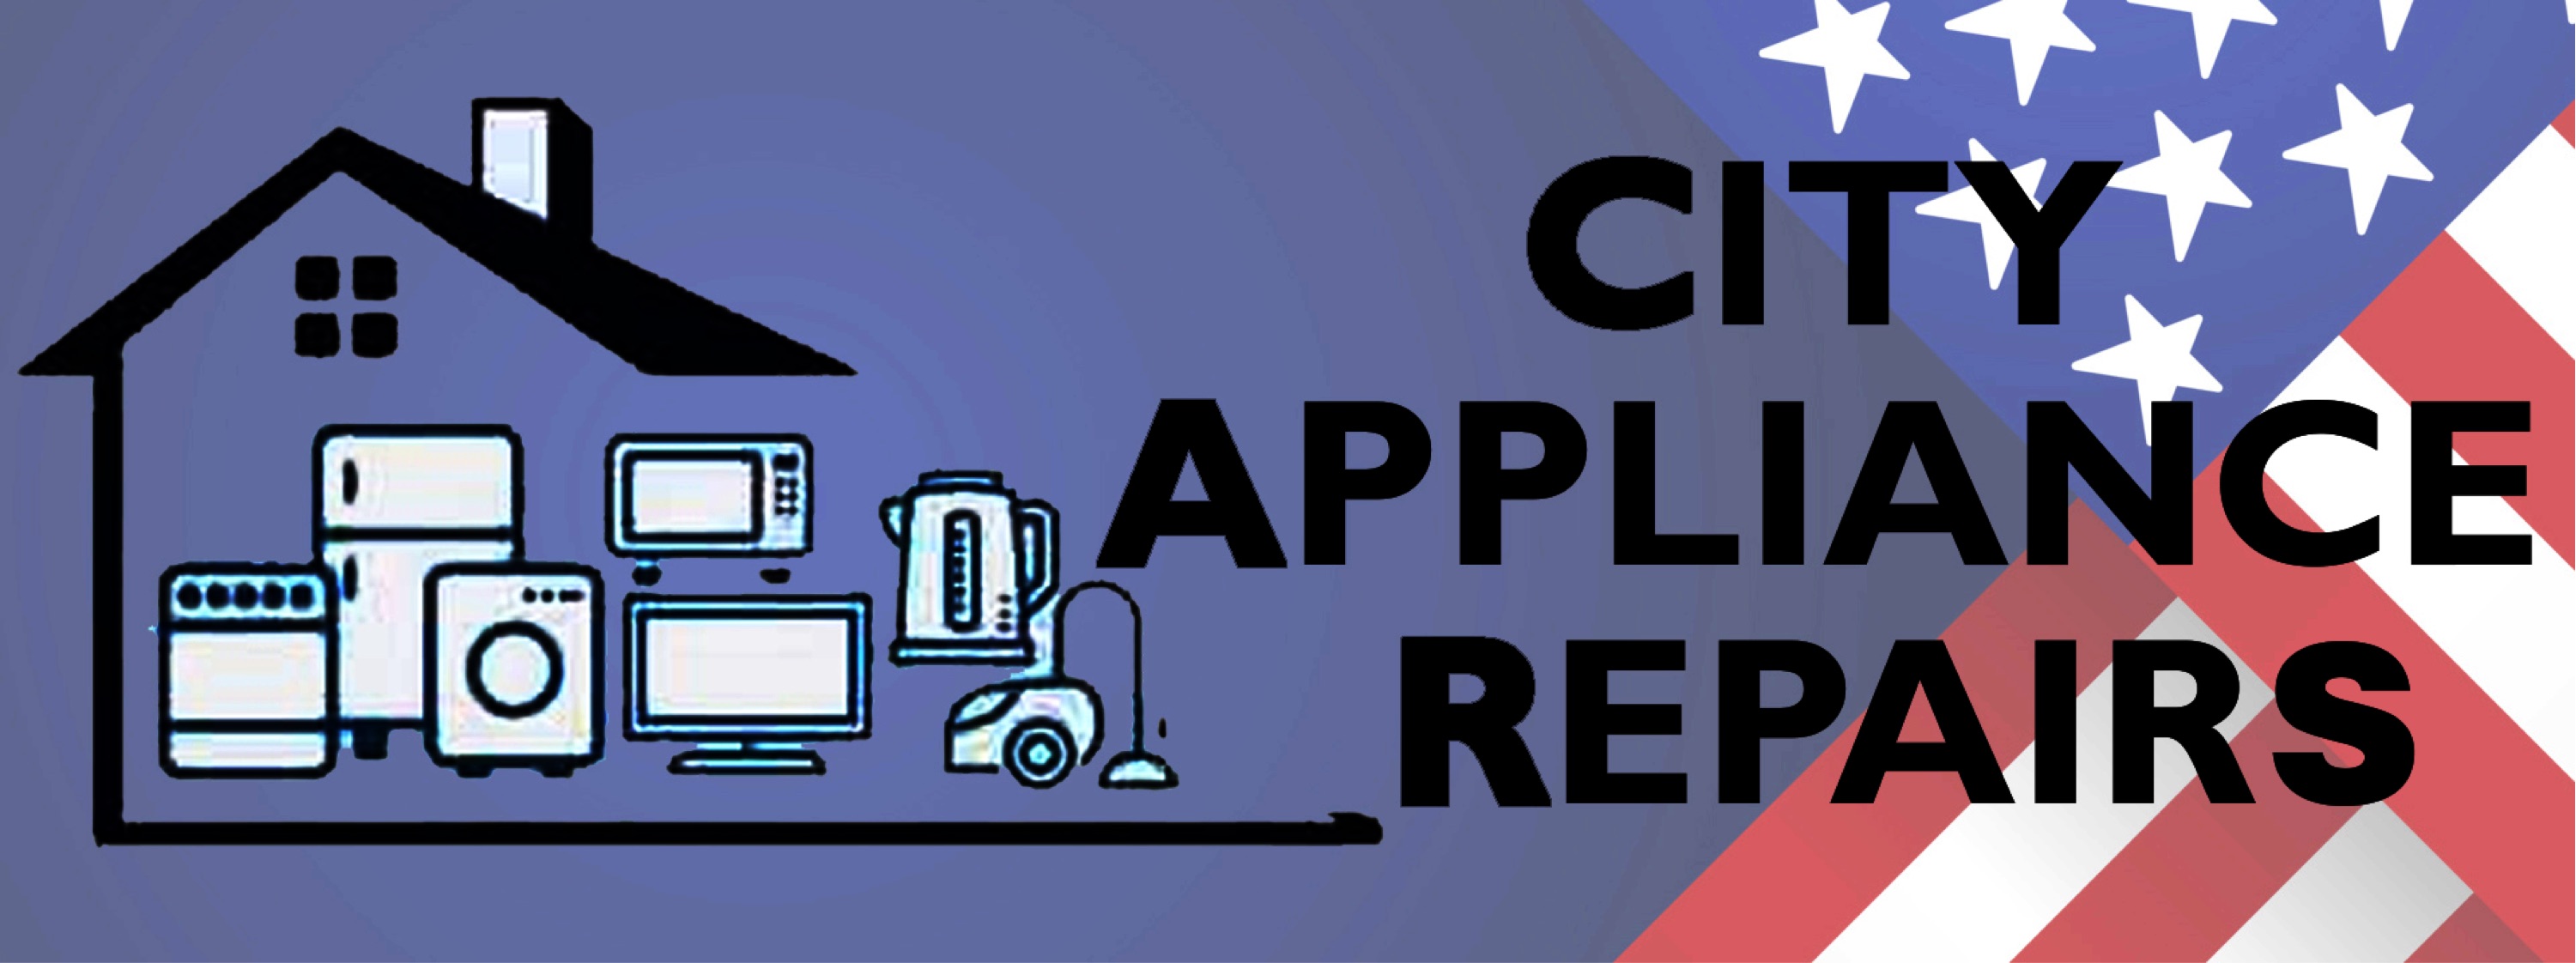 City Appliance Repairs Logo